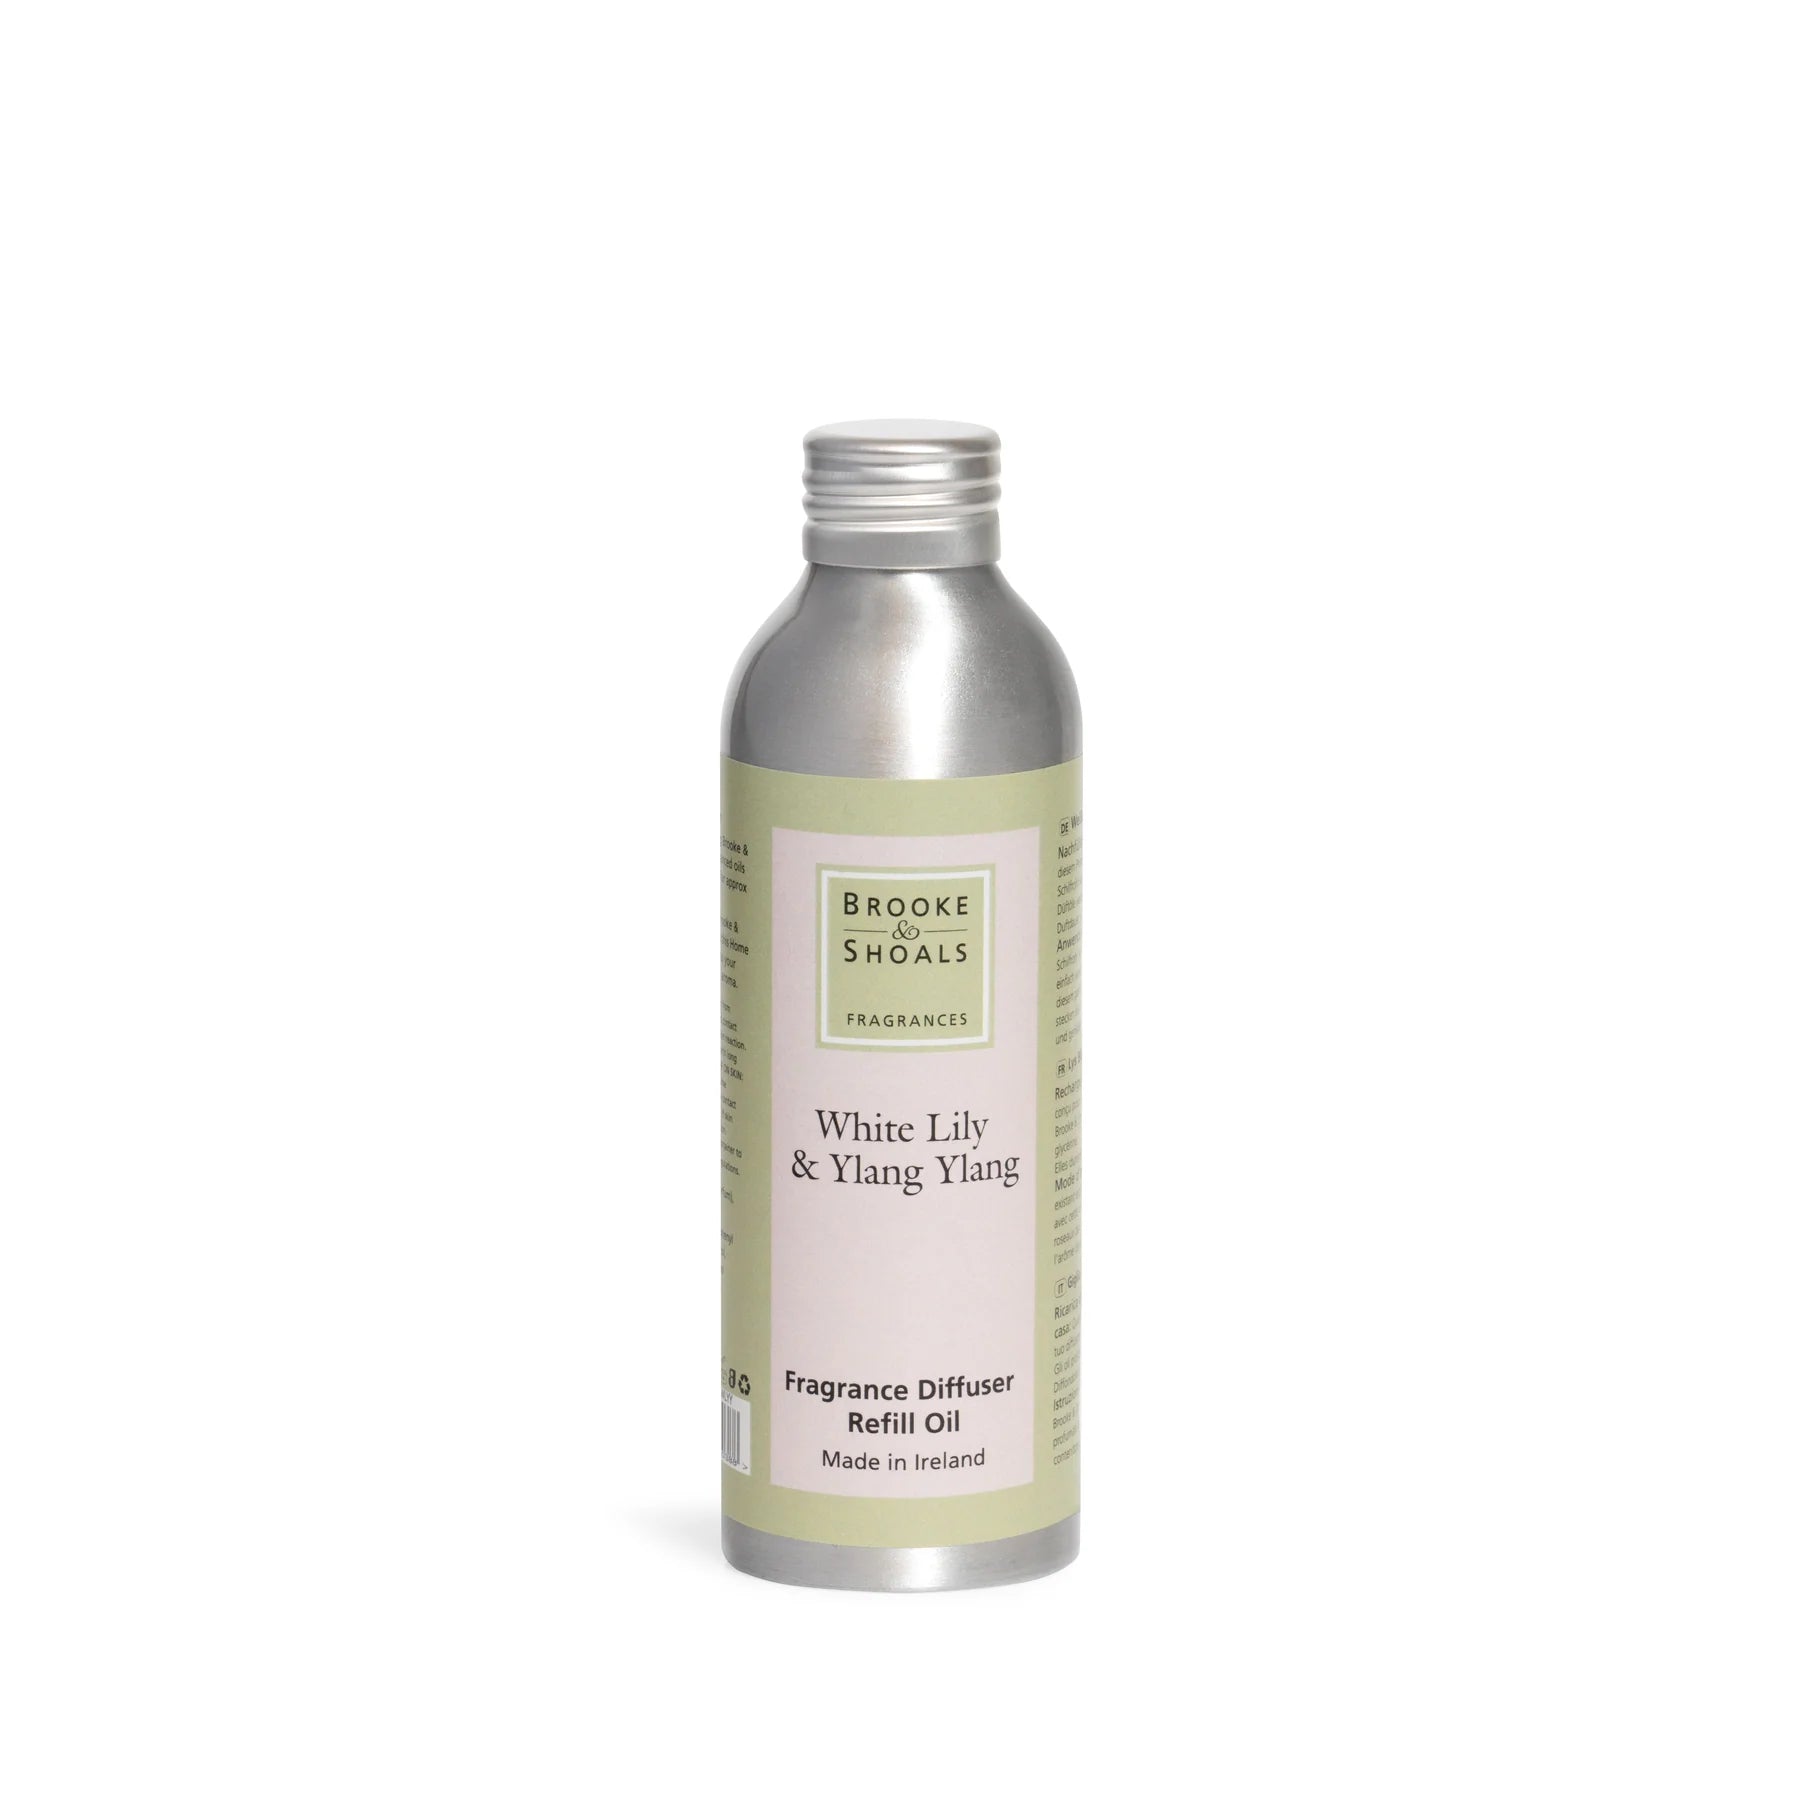 Brooke & Shoals Fragrance Diffuser Refill Oils - White Lily & Ylang Ylang